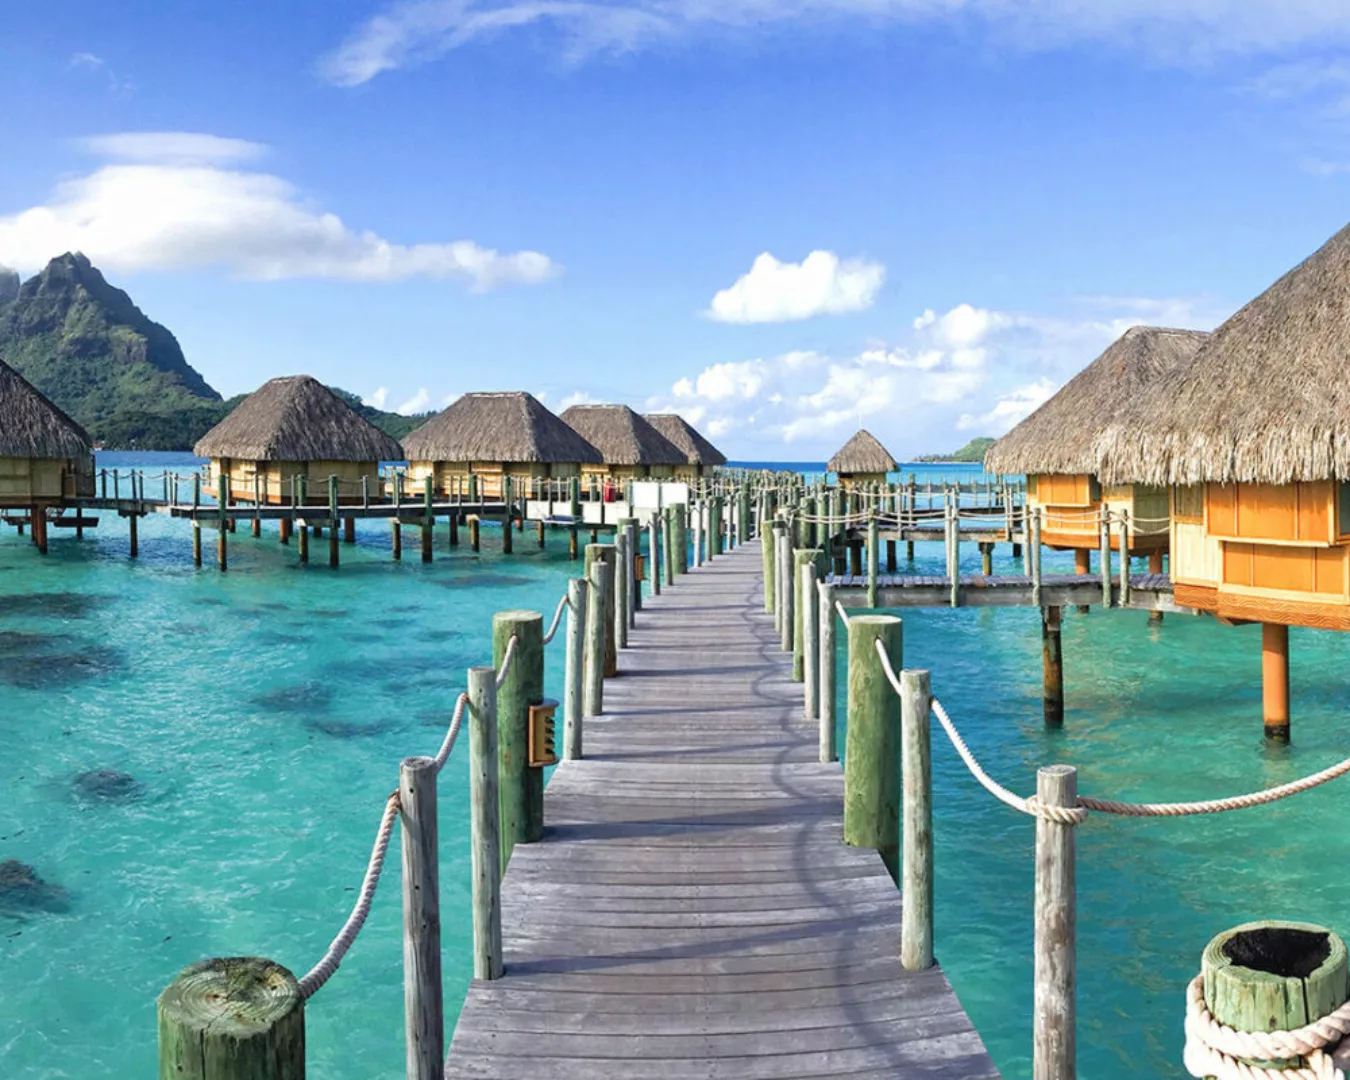 Fototapete "TahitiBungalow" 4,00x2,50 m / Glattvlies Brillant günstig online kaufen